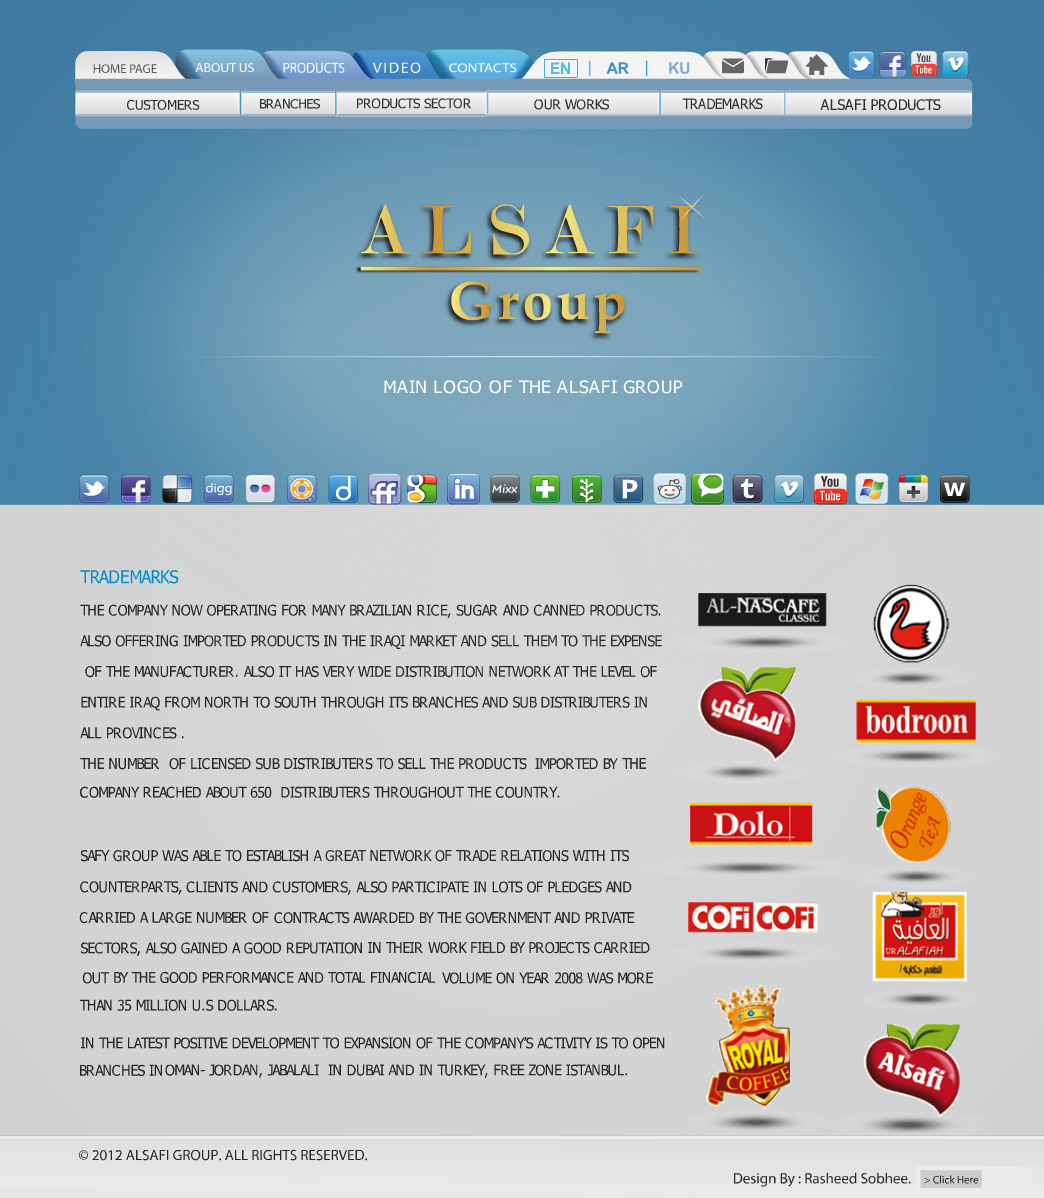 red grey Webdesign graphic psd photoshop ai Illustrator HTML css Layout Flash swf fla Adobe Flash